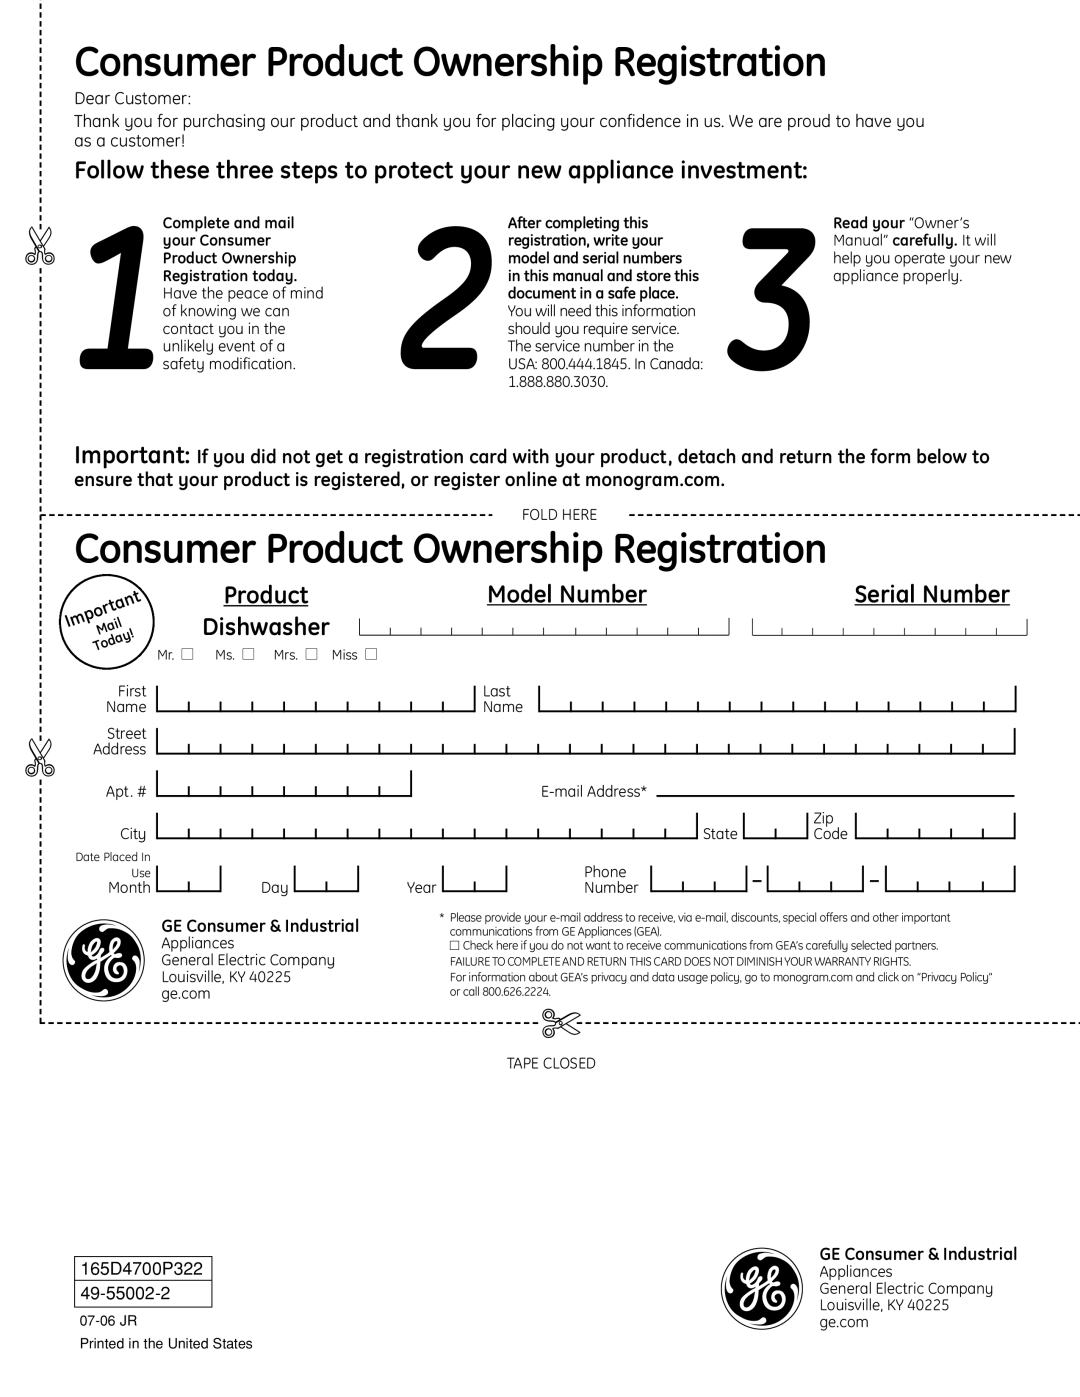 GE Monogram ZBD0710 Consumer Product Ownership Registration, Model Number, Dishwasher, Serial Number, 165D4700P322 